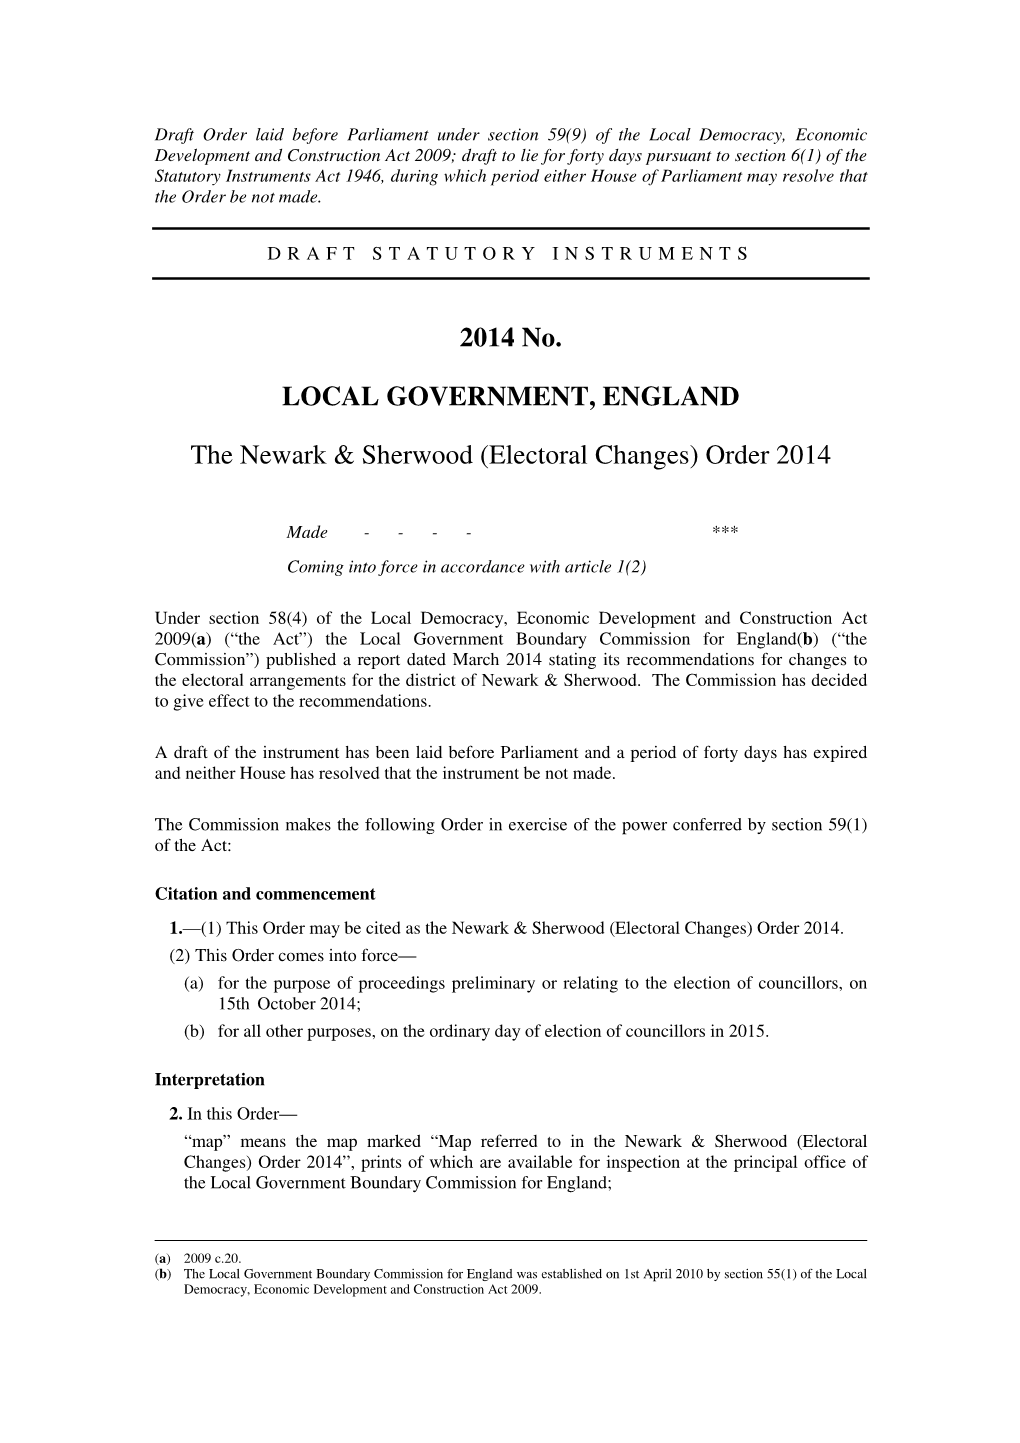 The Newark & Sherwood (Electoral Changes) Order 2014